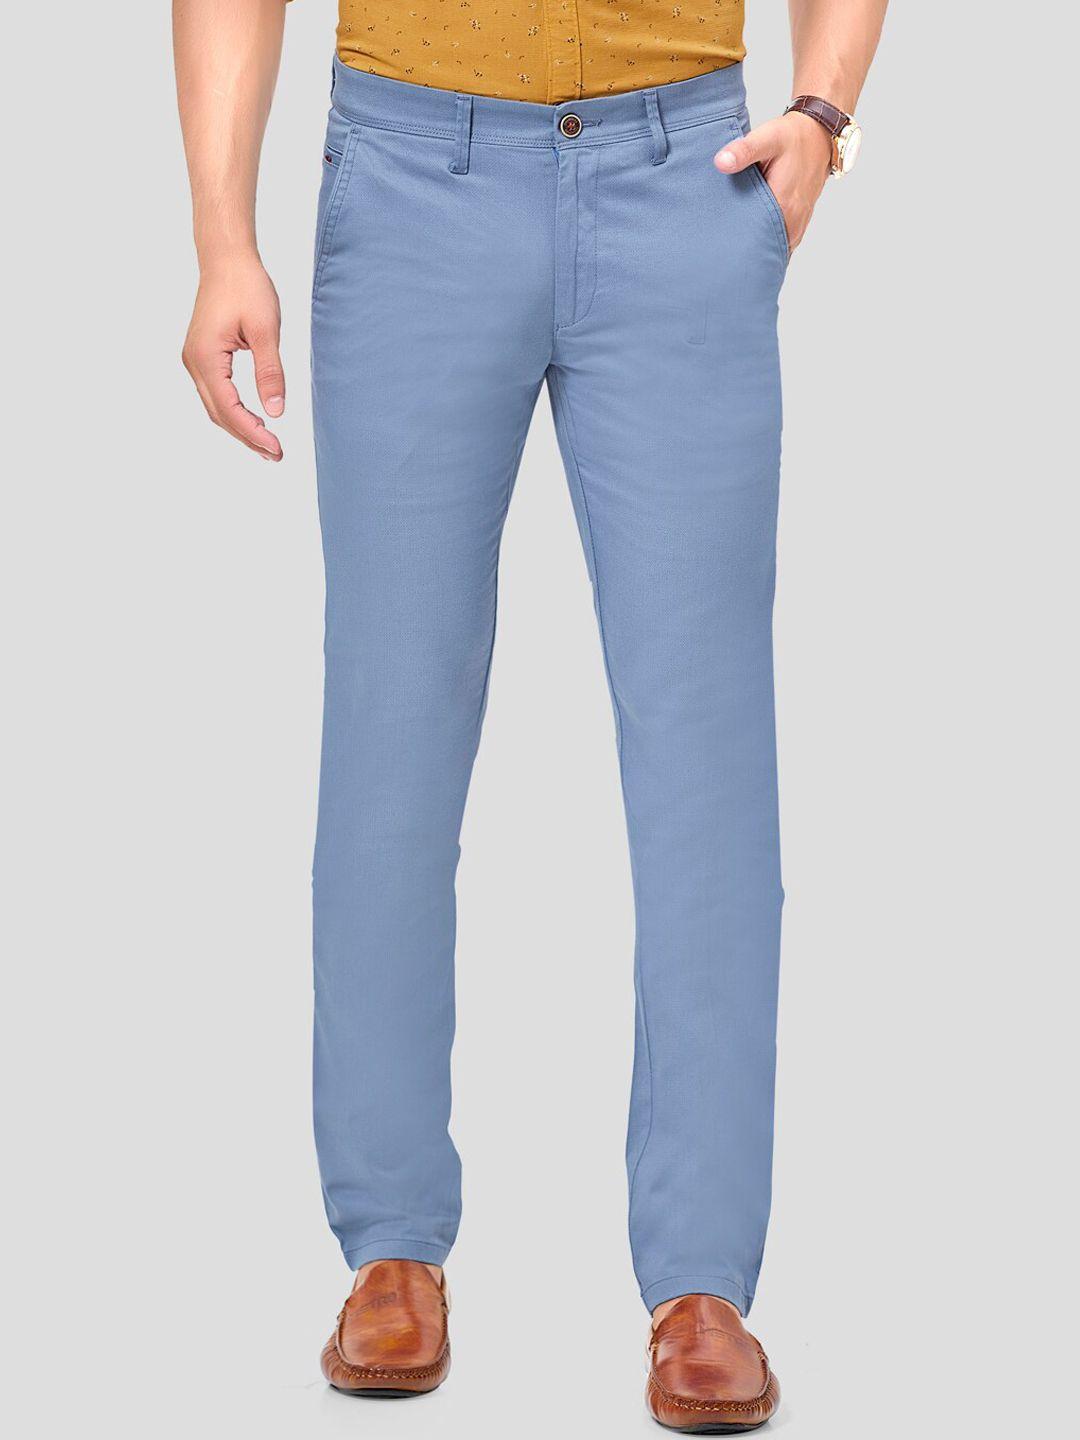 oxemberg-men-blue-smart-slim-fit-chinos-trouser